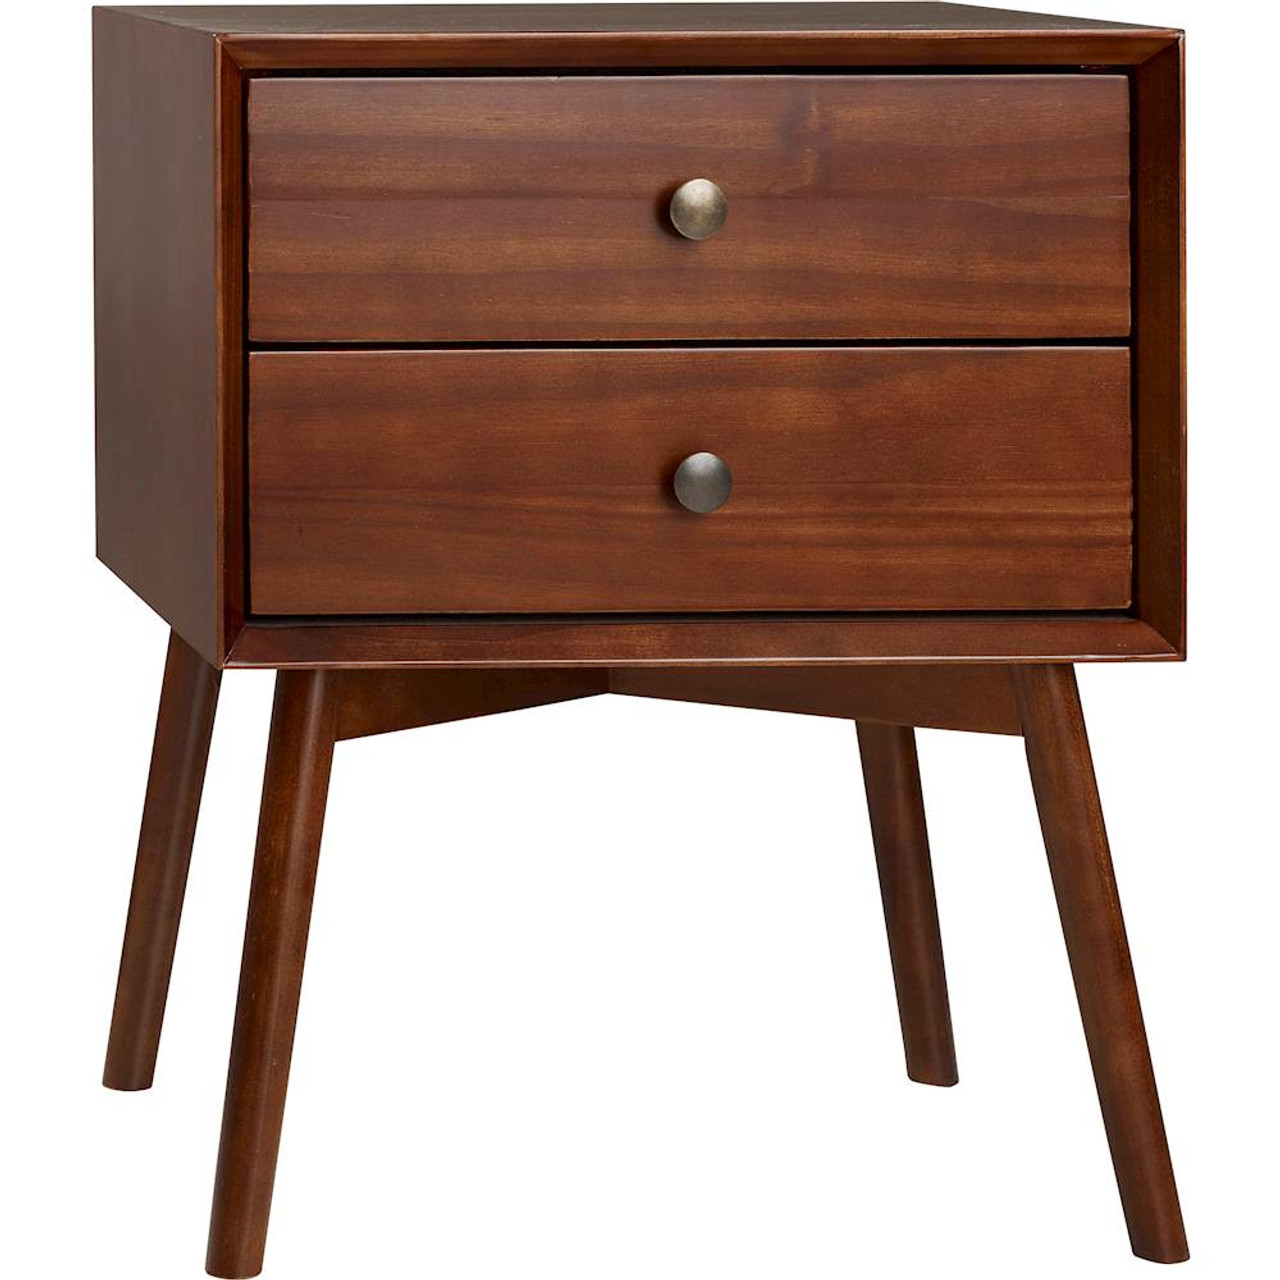 Walker Edison - Mid-Century Solid Wood 2-Drawers Cabinet - Walnut